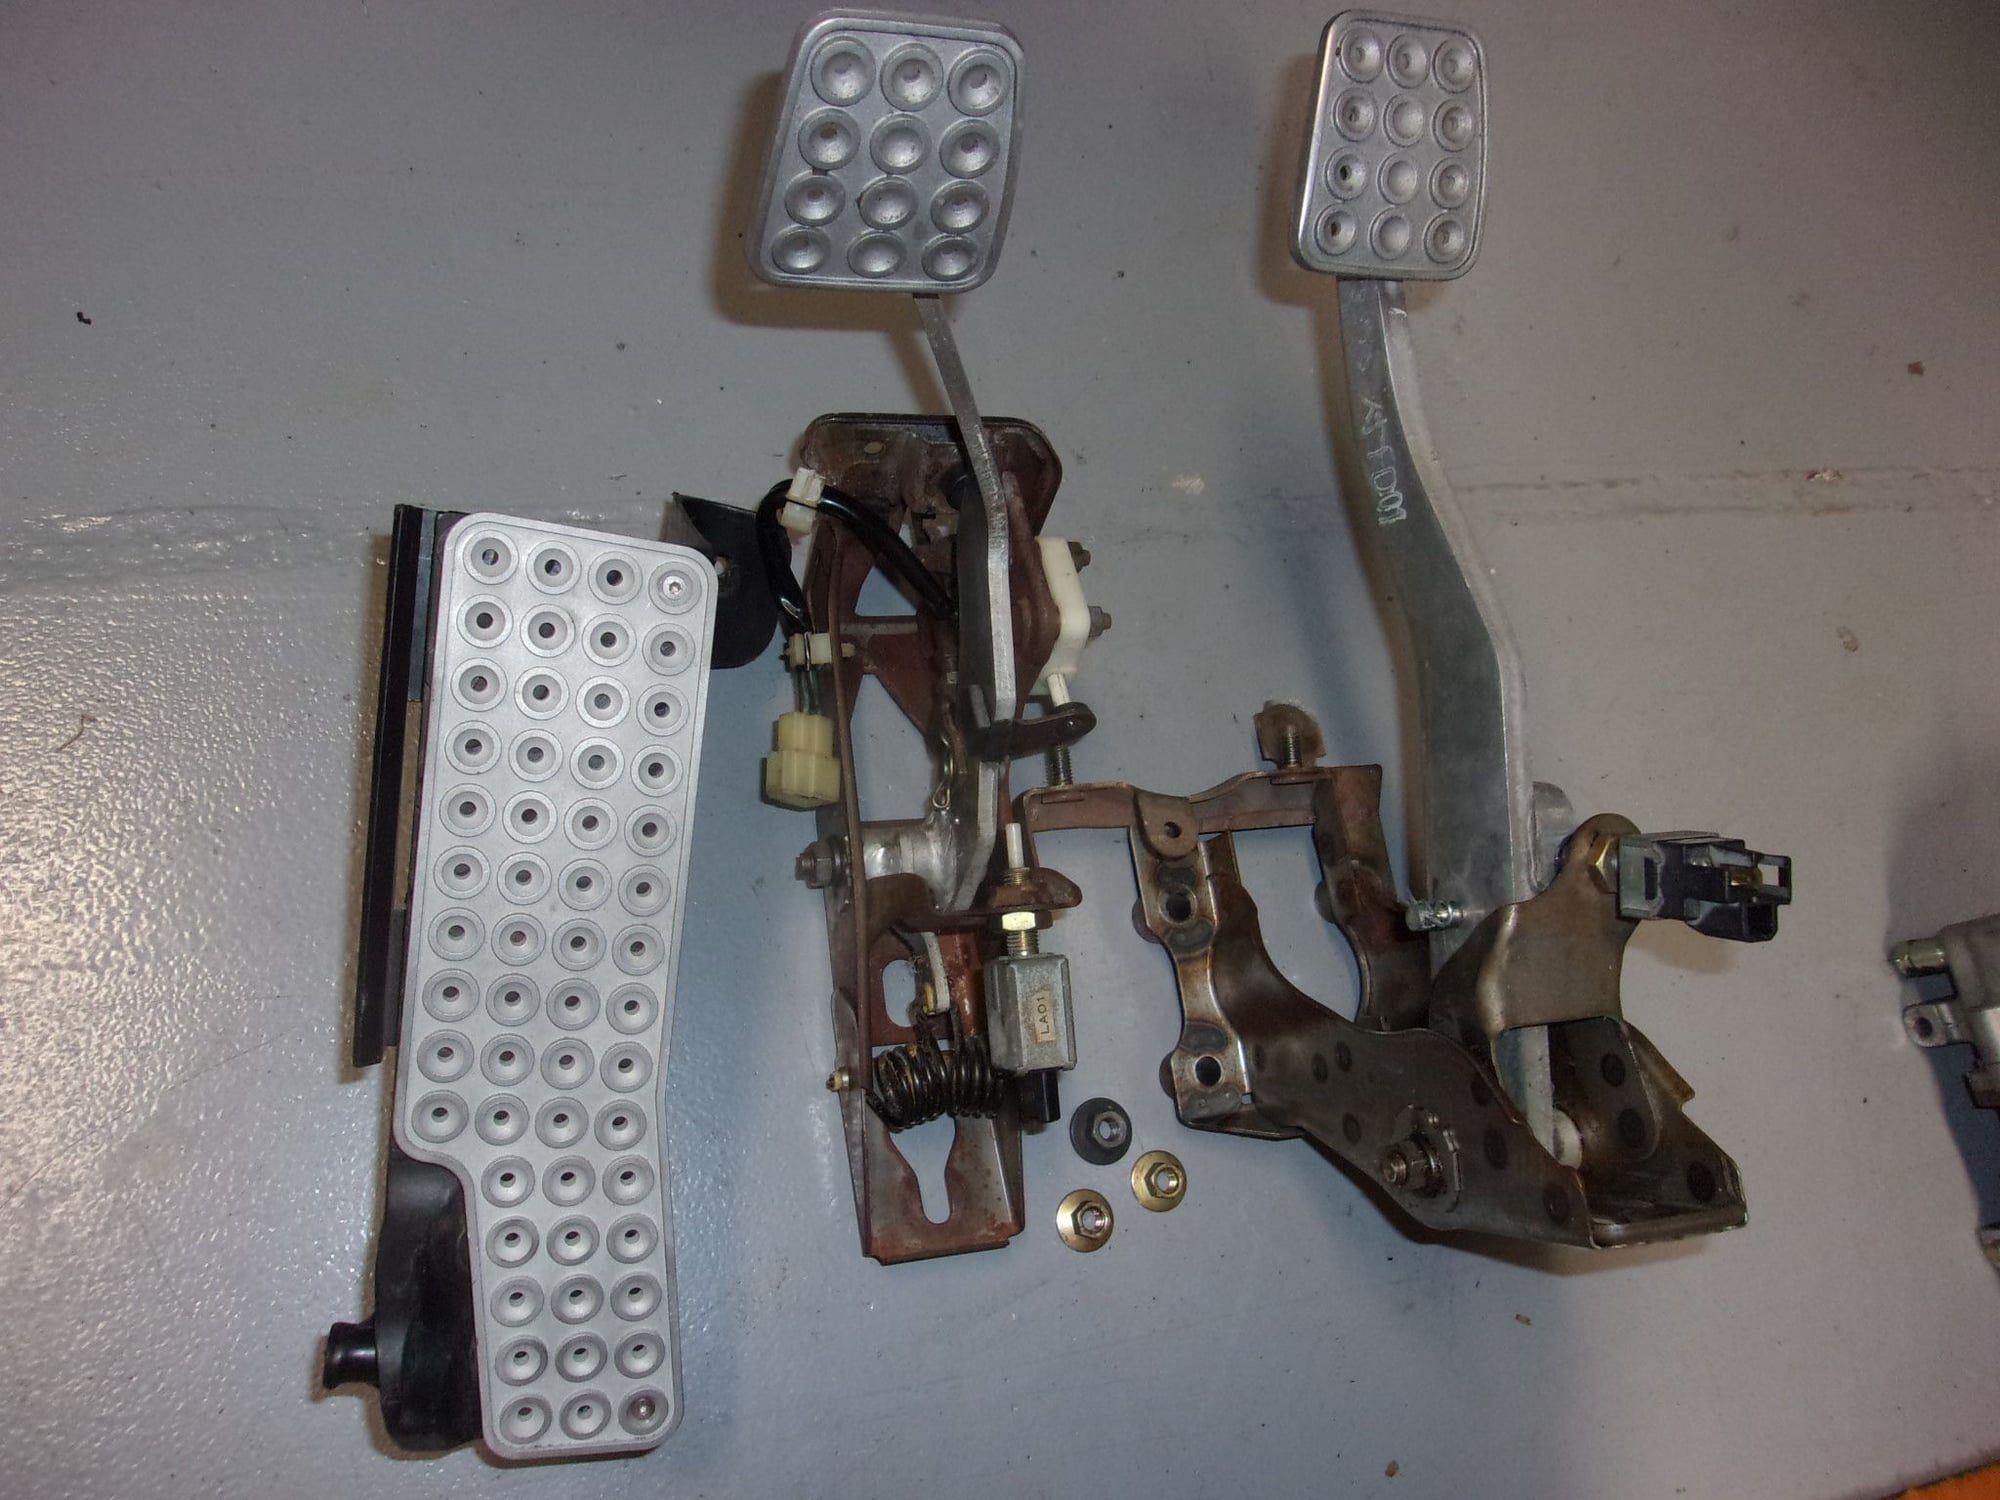 Brakes - Pedal Set - Used - 1993 to 1995 Mazda RX-7 - Murfreesboro, TN 37130, United States